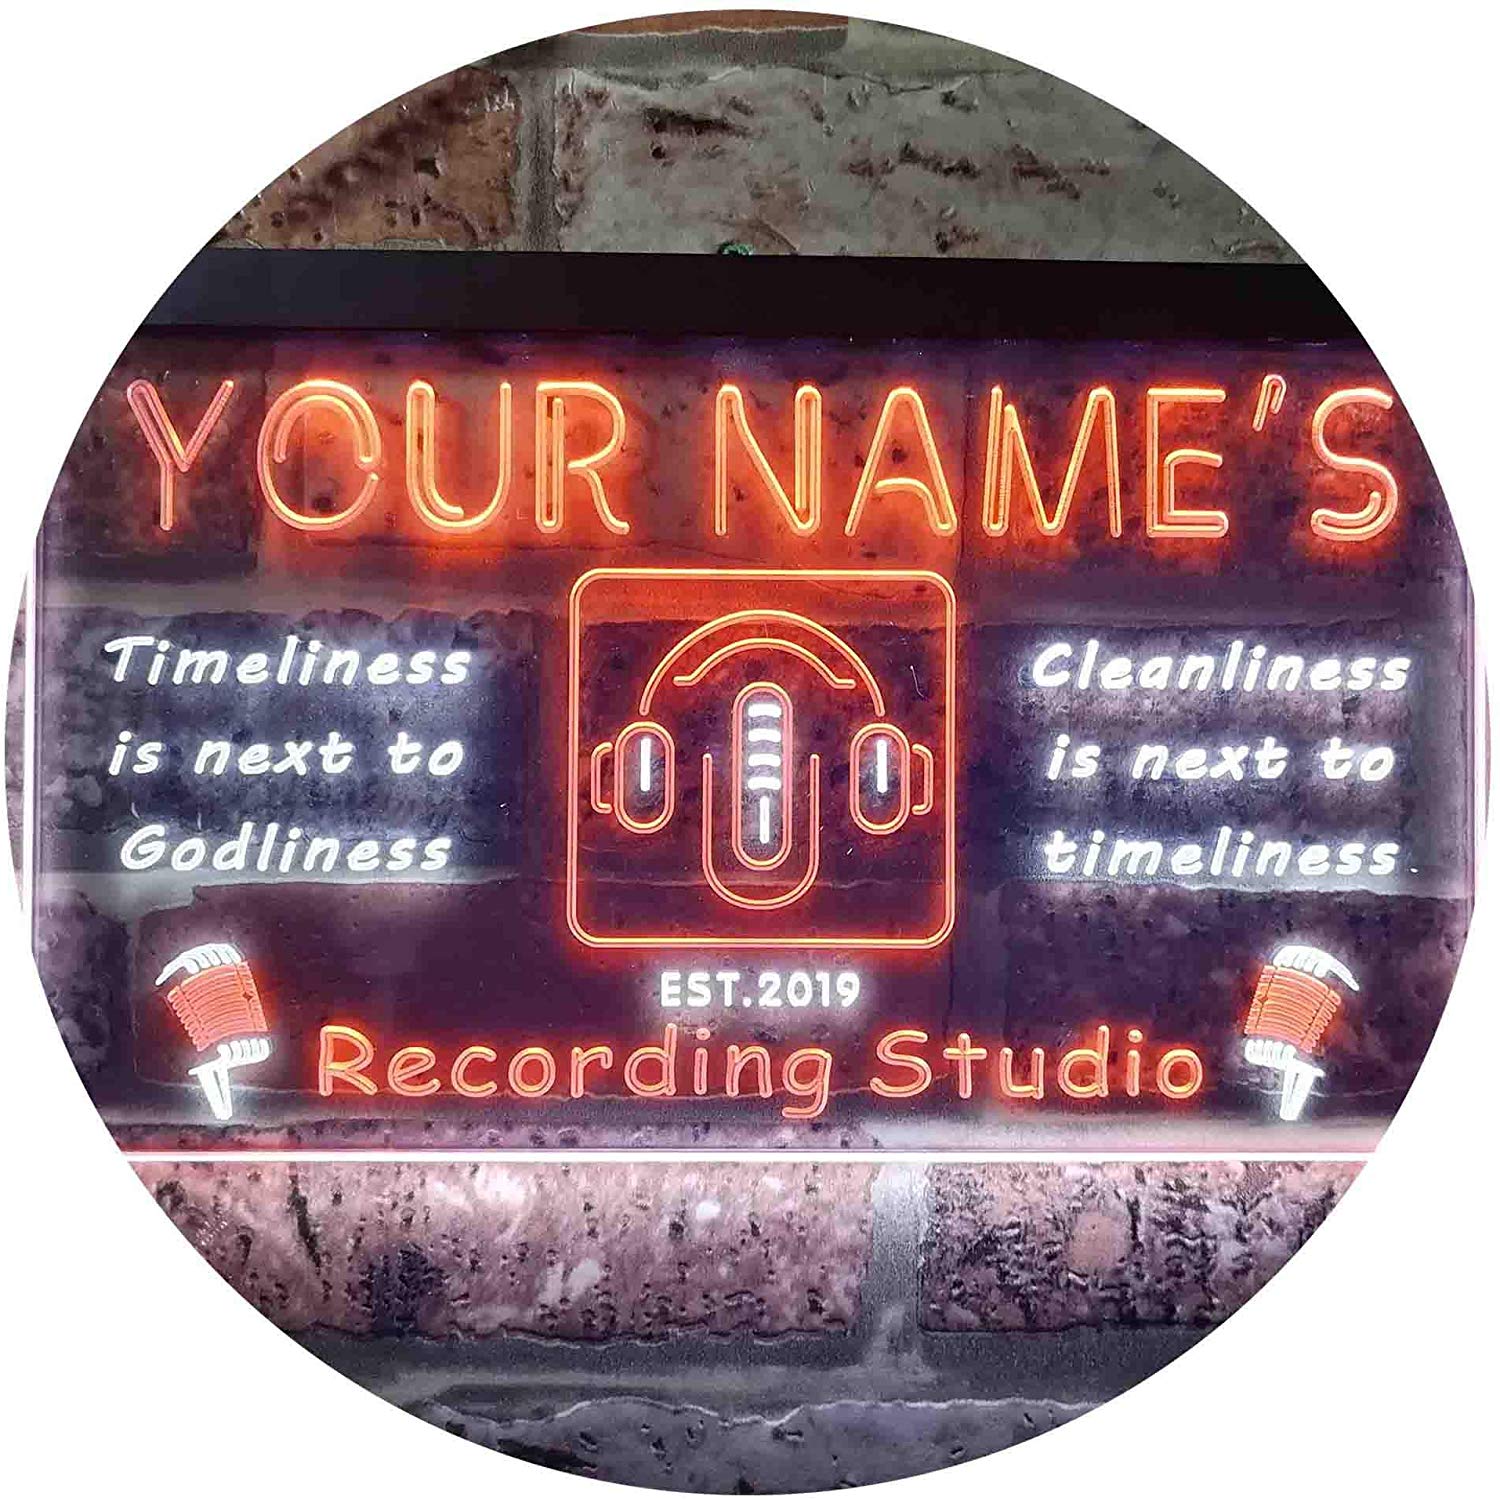 Custom Recording Studio LED Neon Light Sign - Way Up Gifts